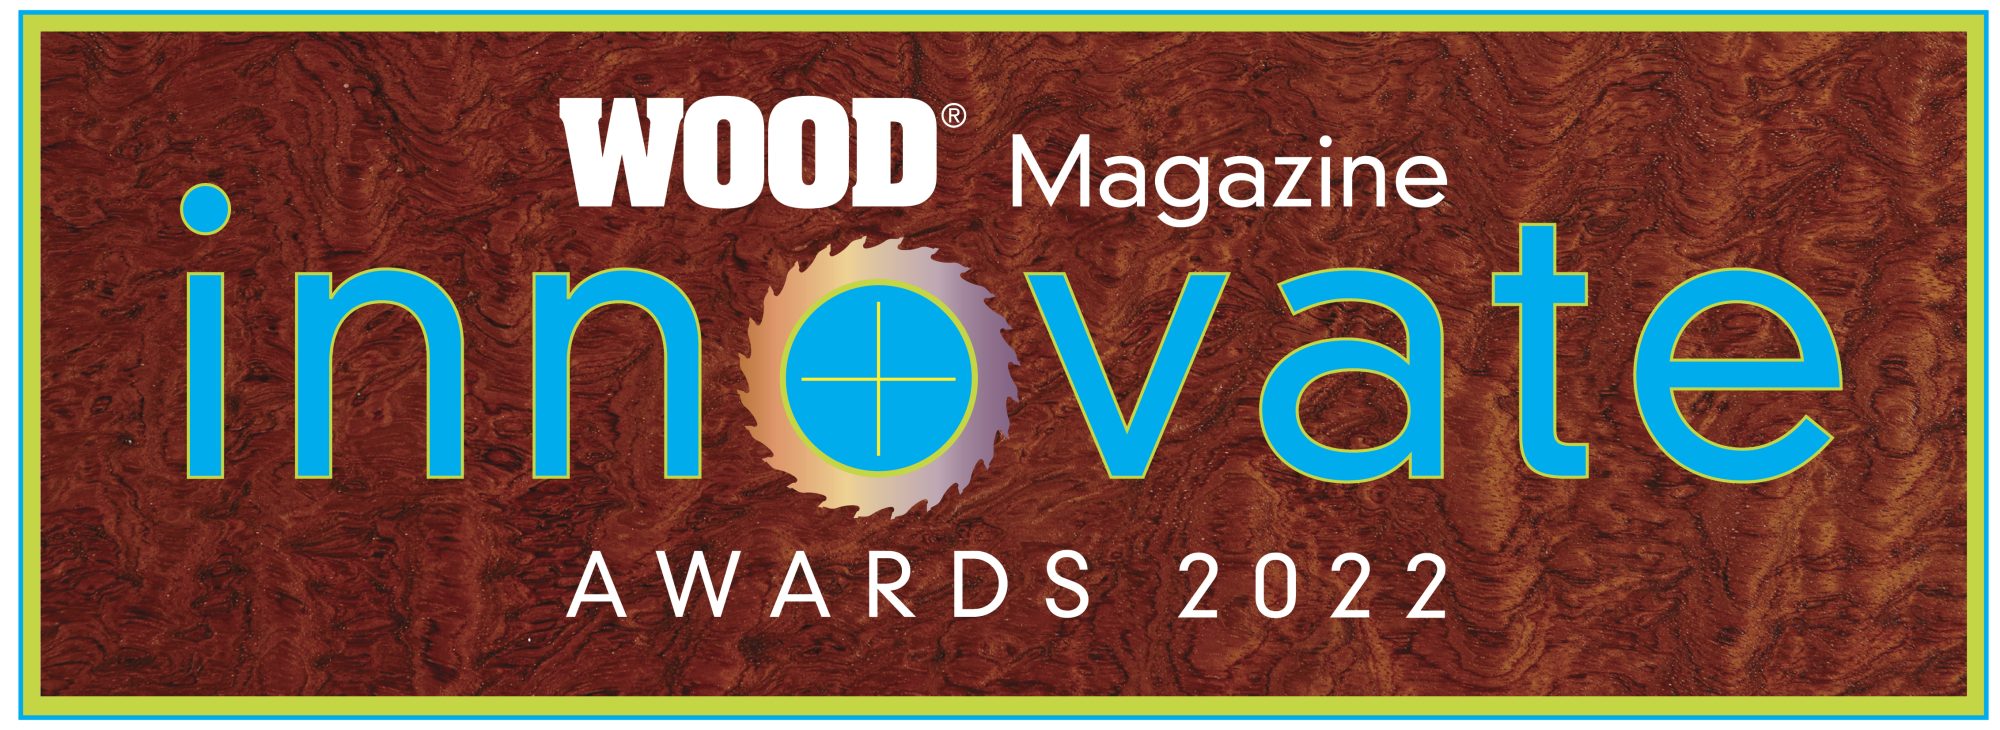 Innovate Awards 2022 logo